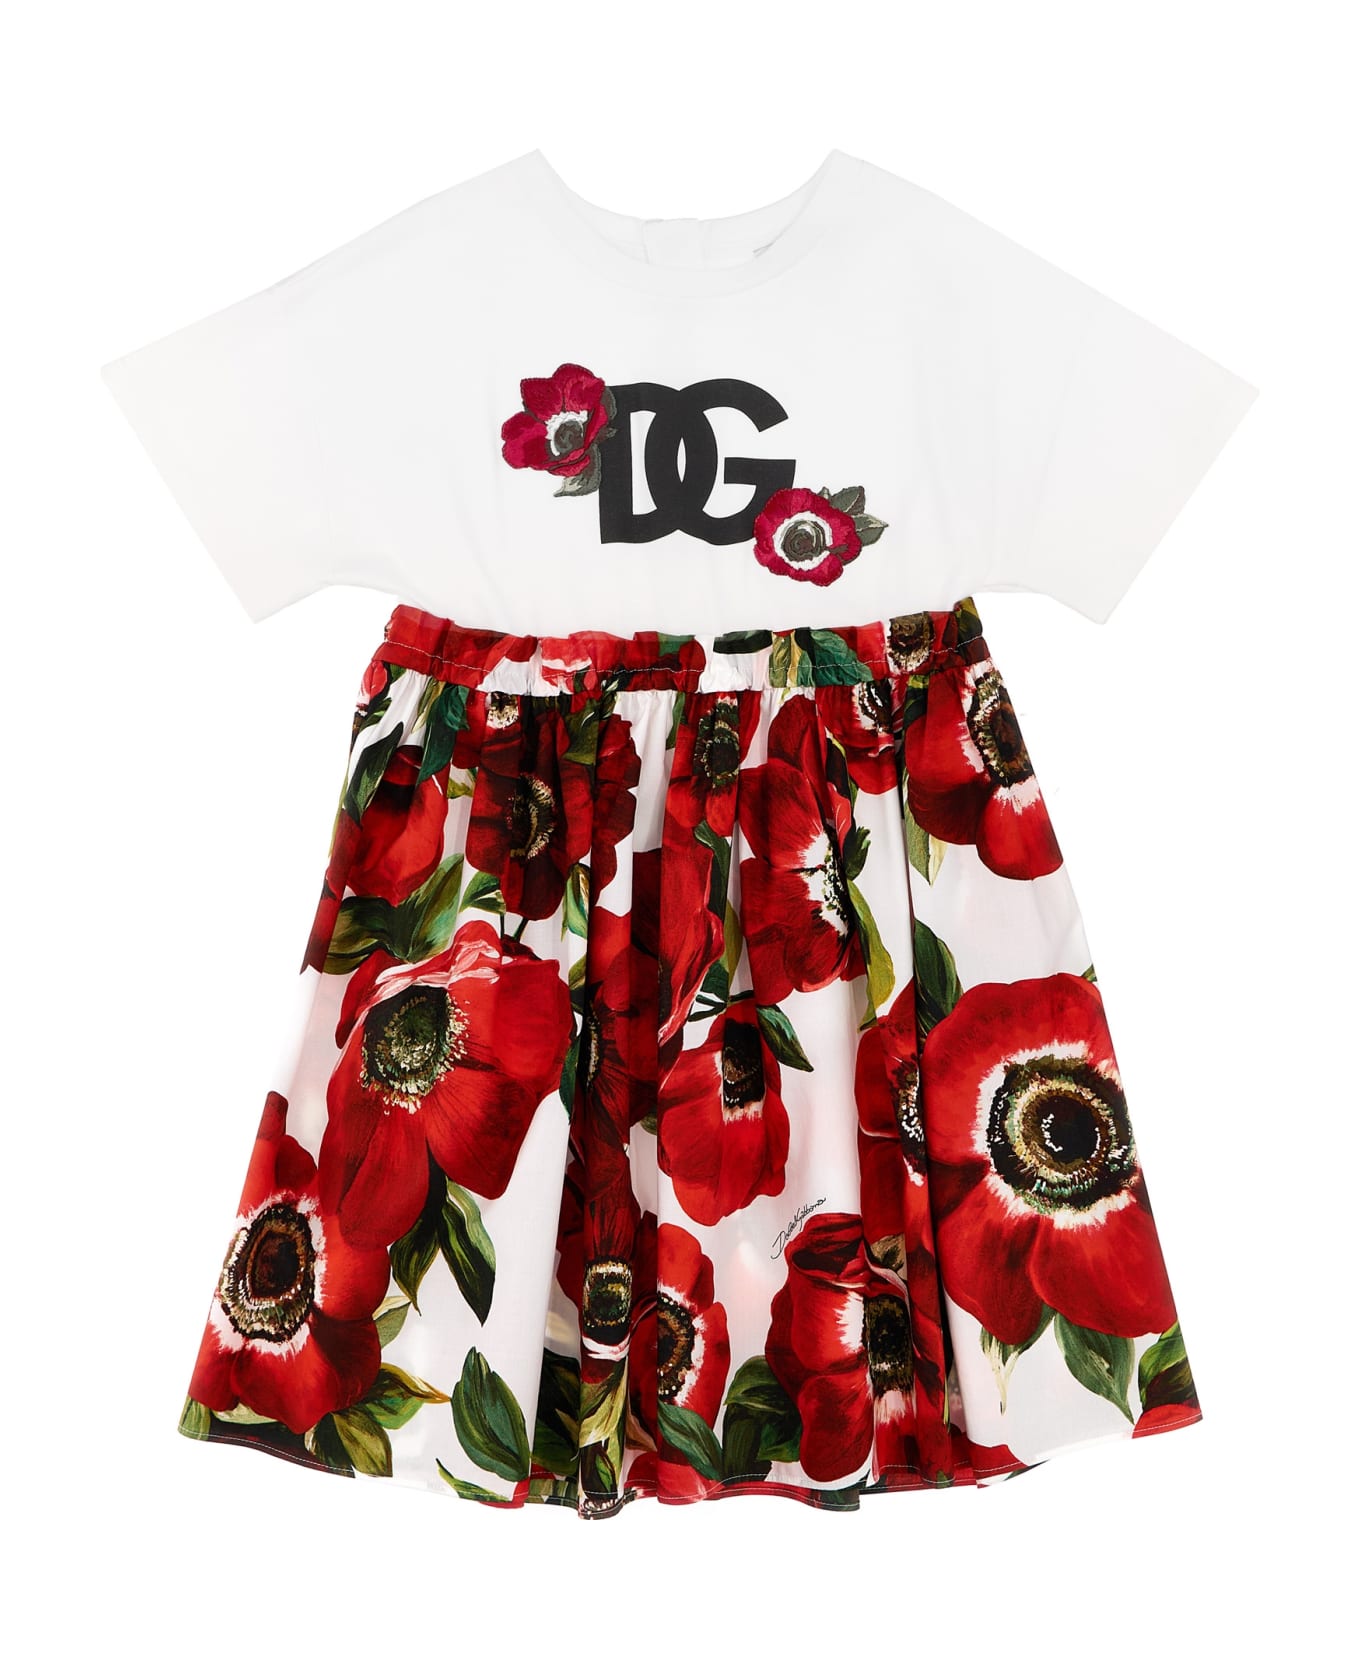 Dolce & Gabbana Poppy Print Dress - Multicolor